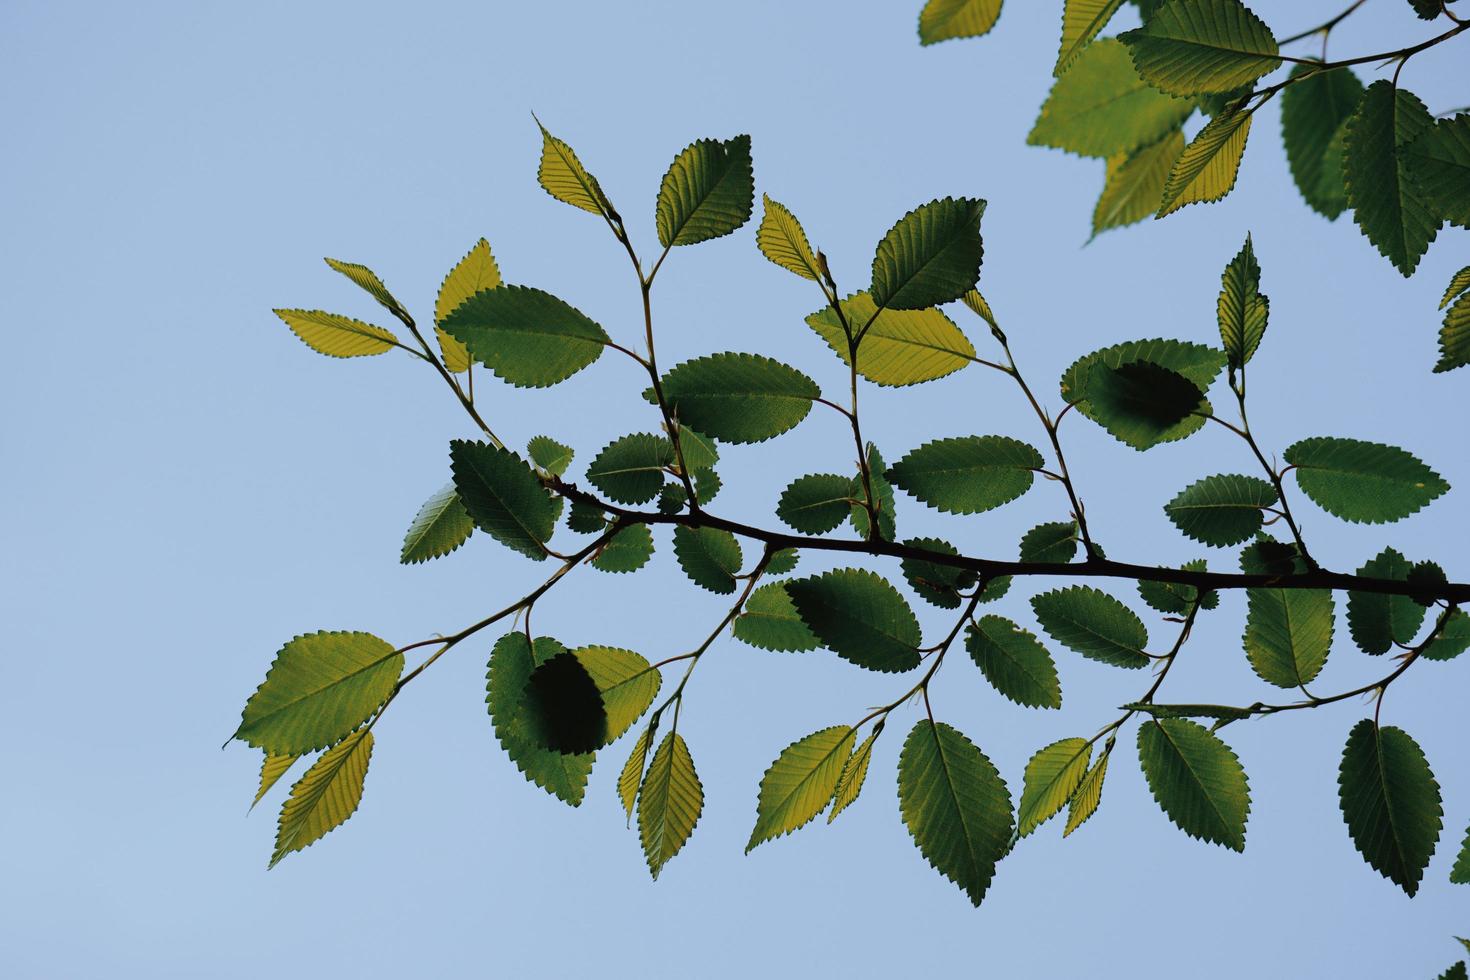 Green tree leaves in spring season photo